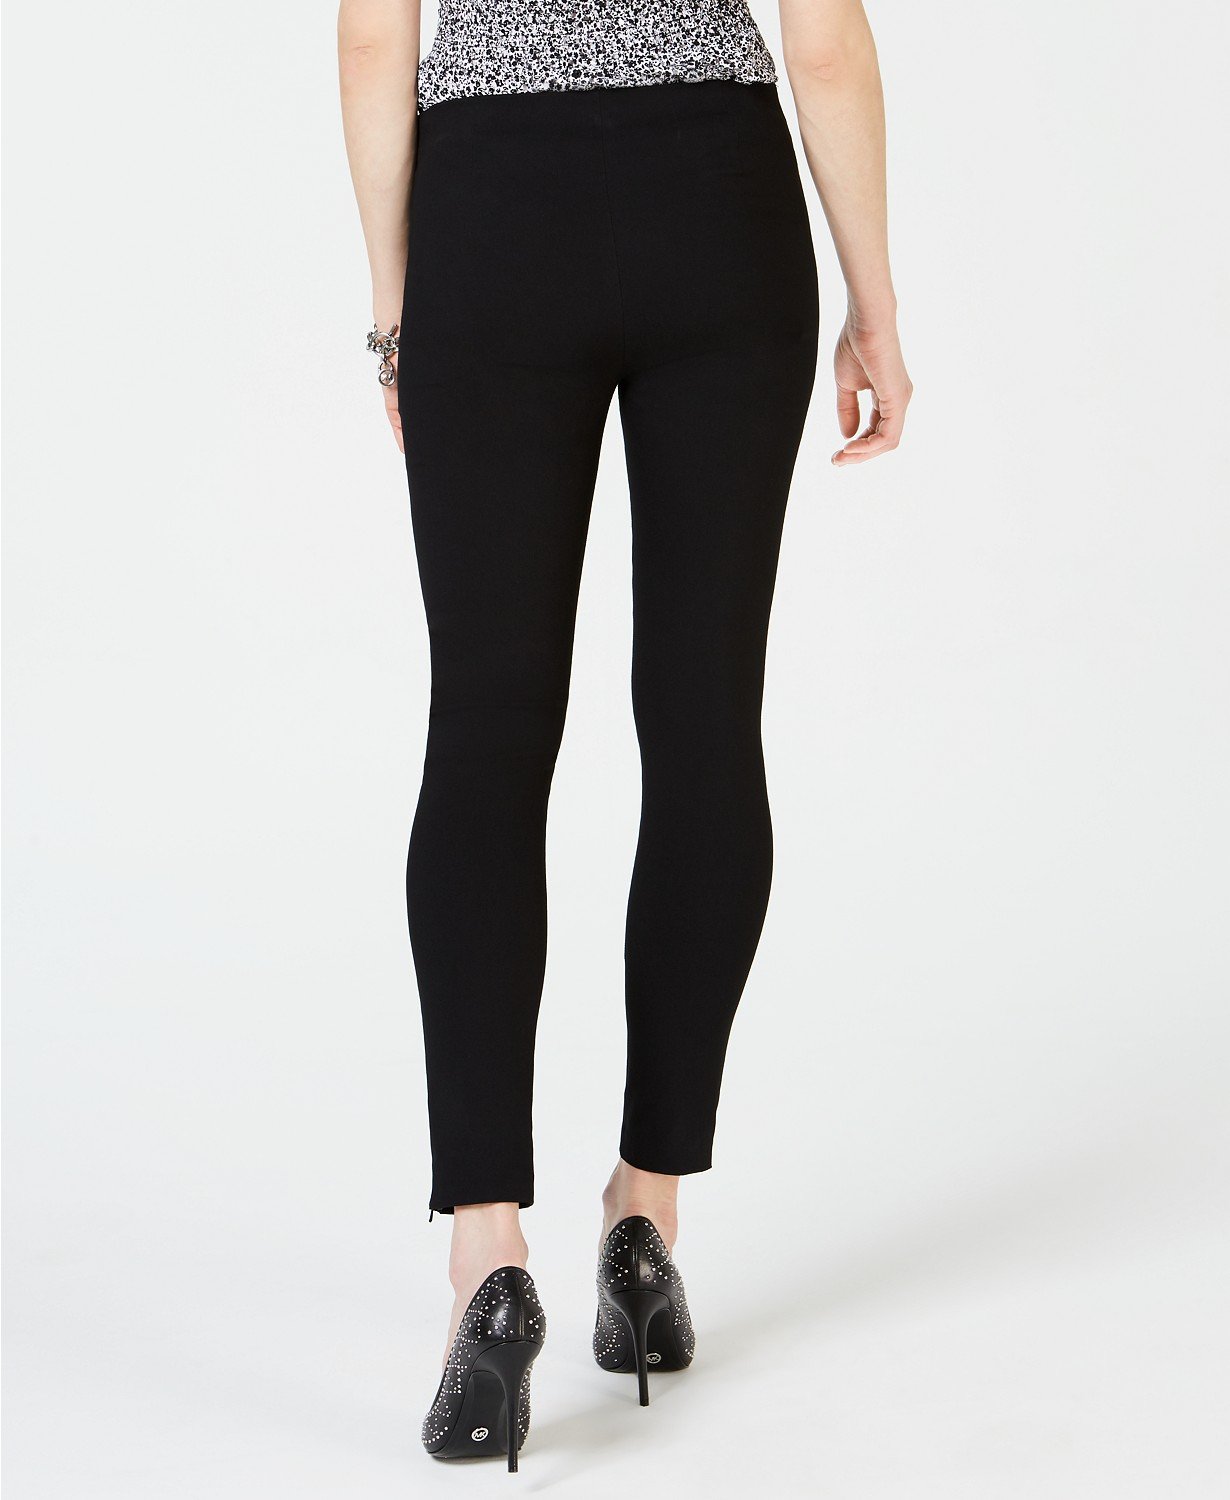 Michael Kors Women's Black Petites Pull On Solid Casual Pants - TopLine Fashion Lounge